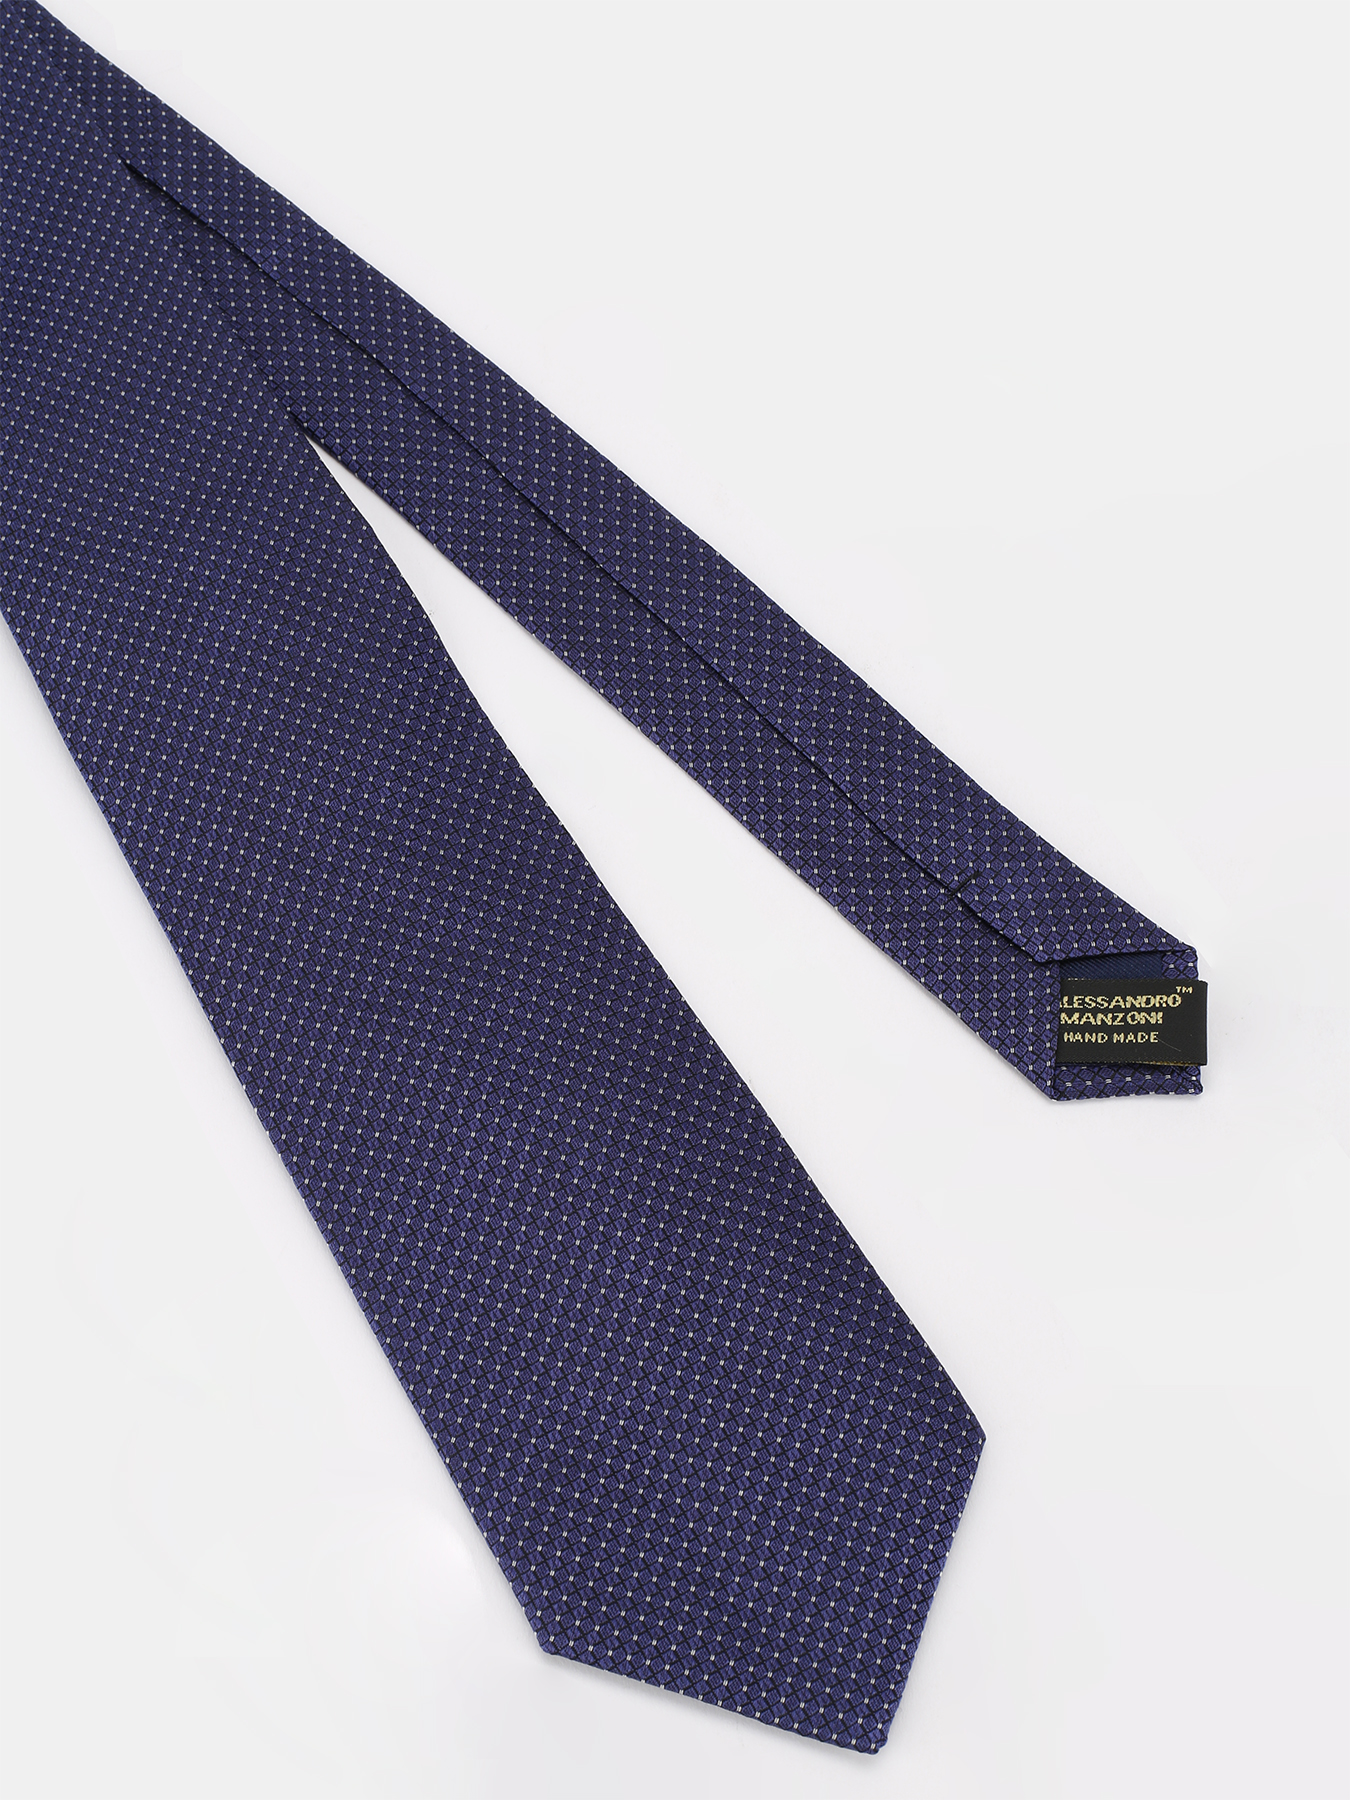 Alessandro Manzoni Шелковый галстук с узорами 324192-185 Фото 3